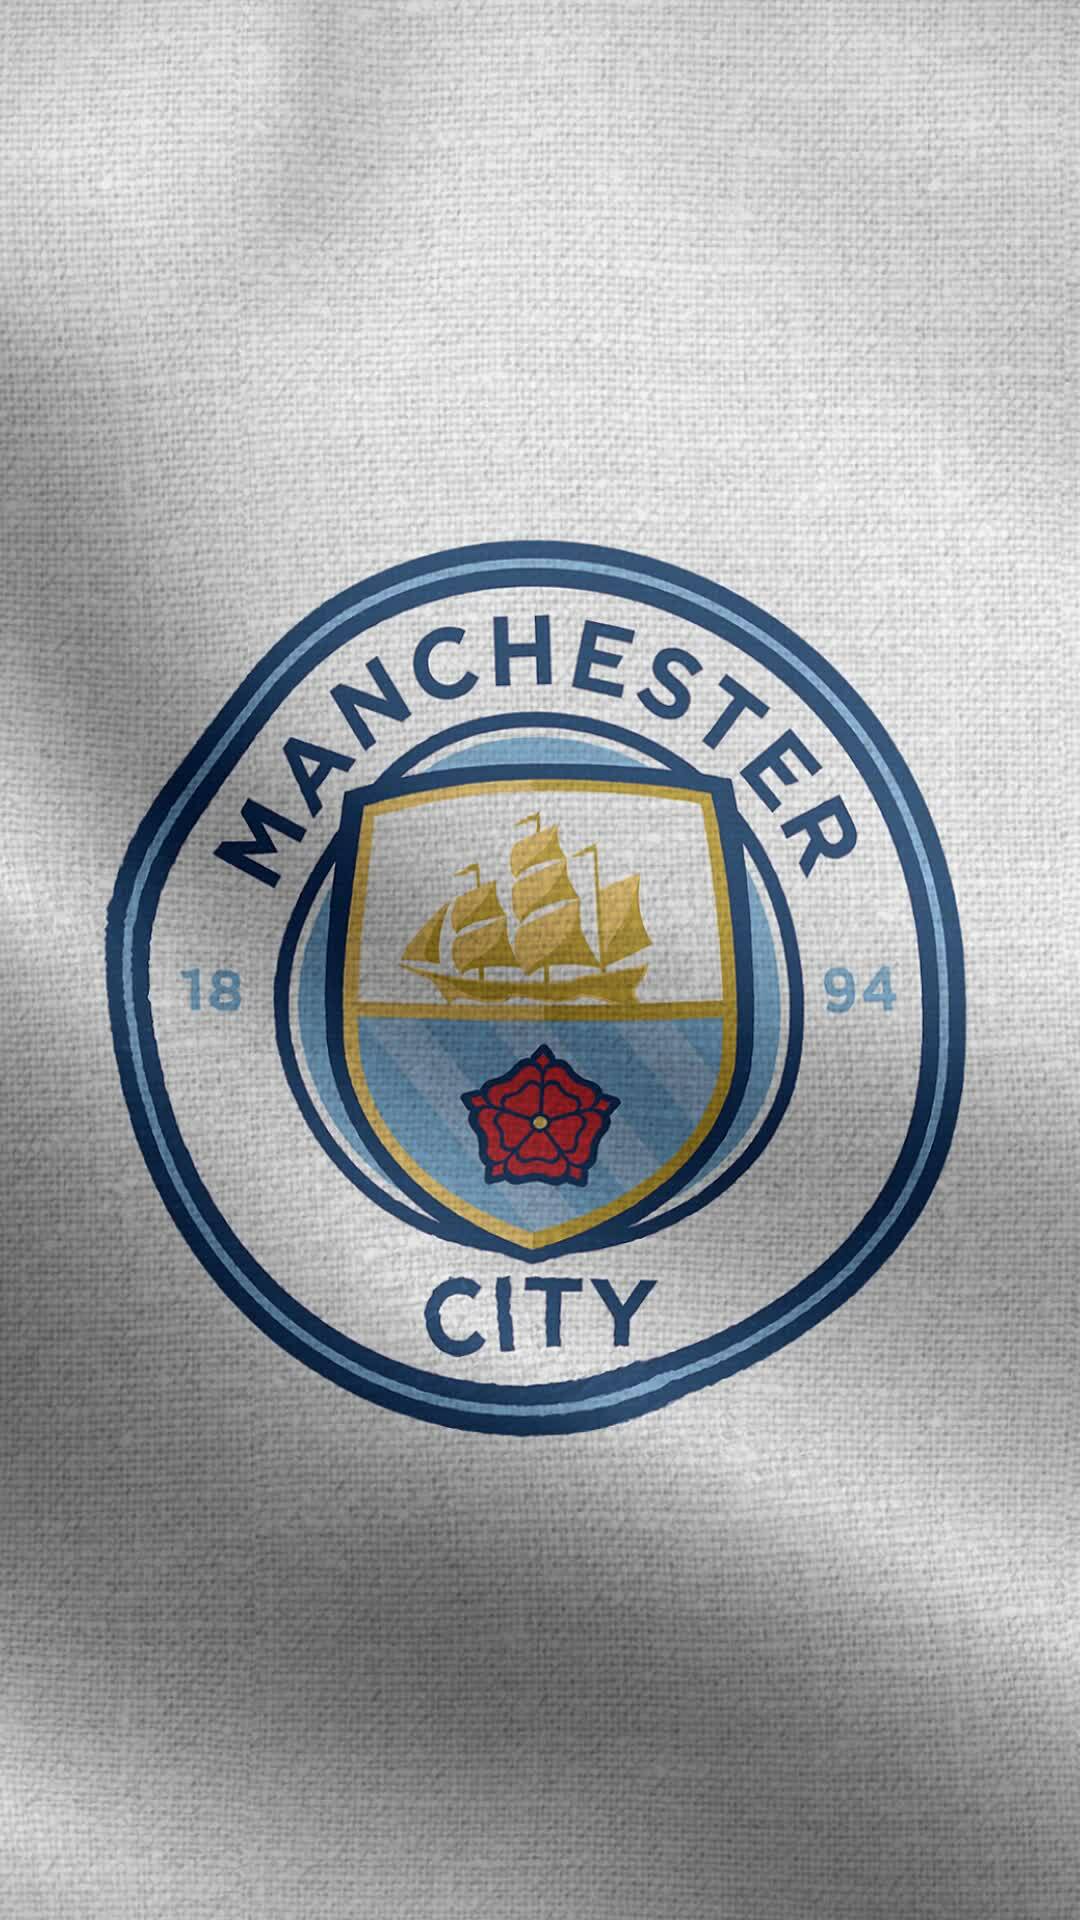 Manchester City FC (England)